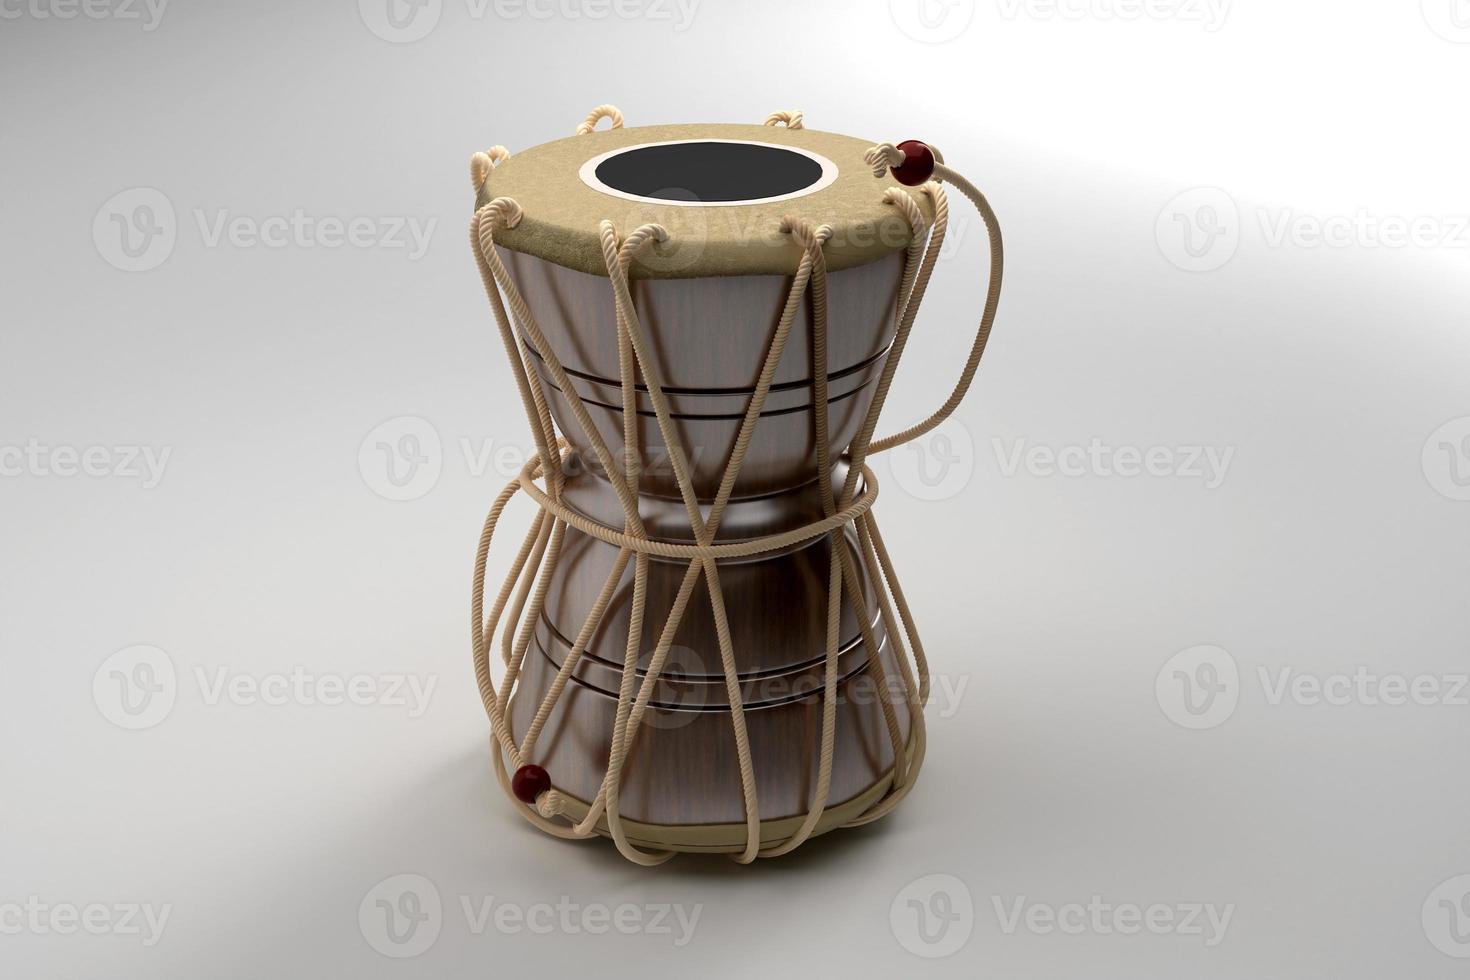 Damru damaru de shiva instrument de musique indienne sur fond blanc - illustration 3d render photo